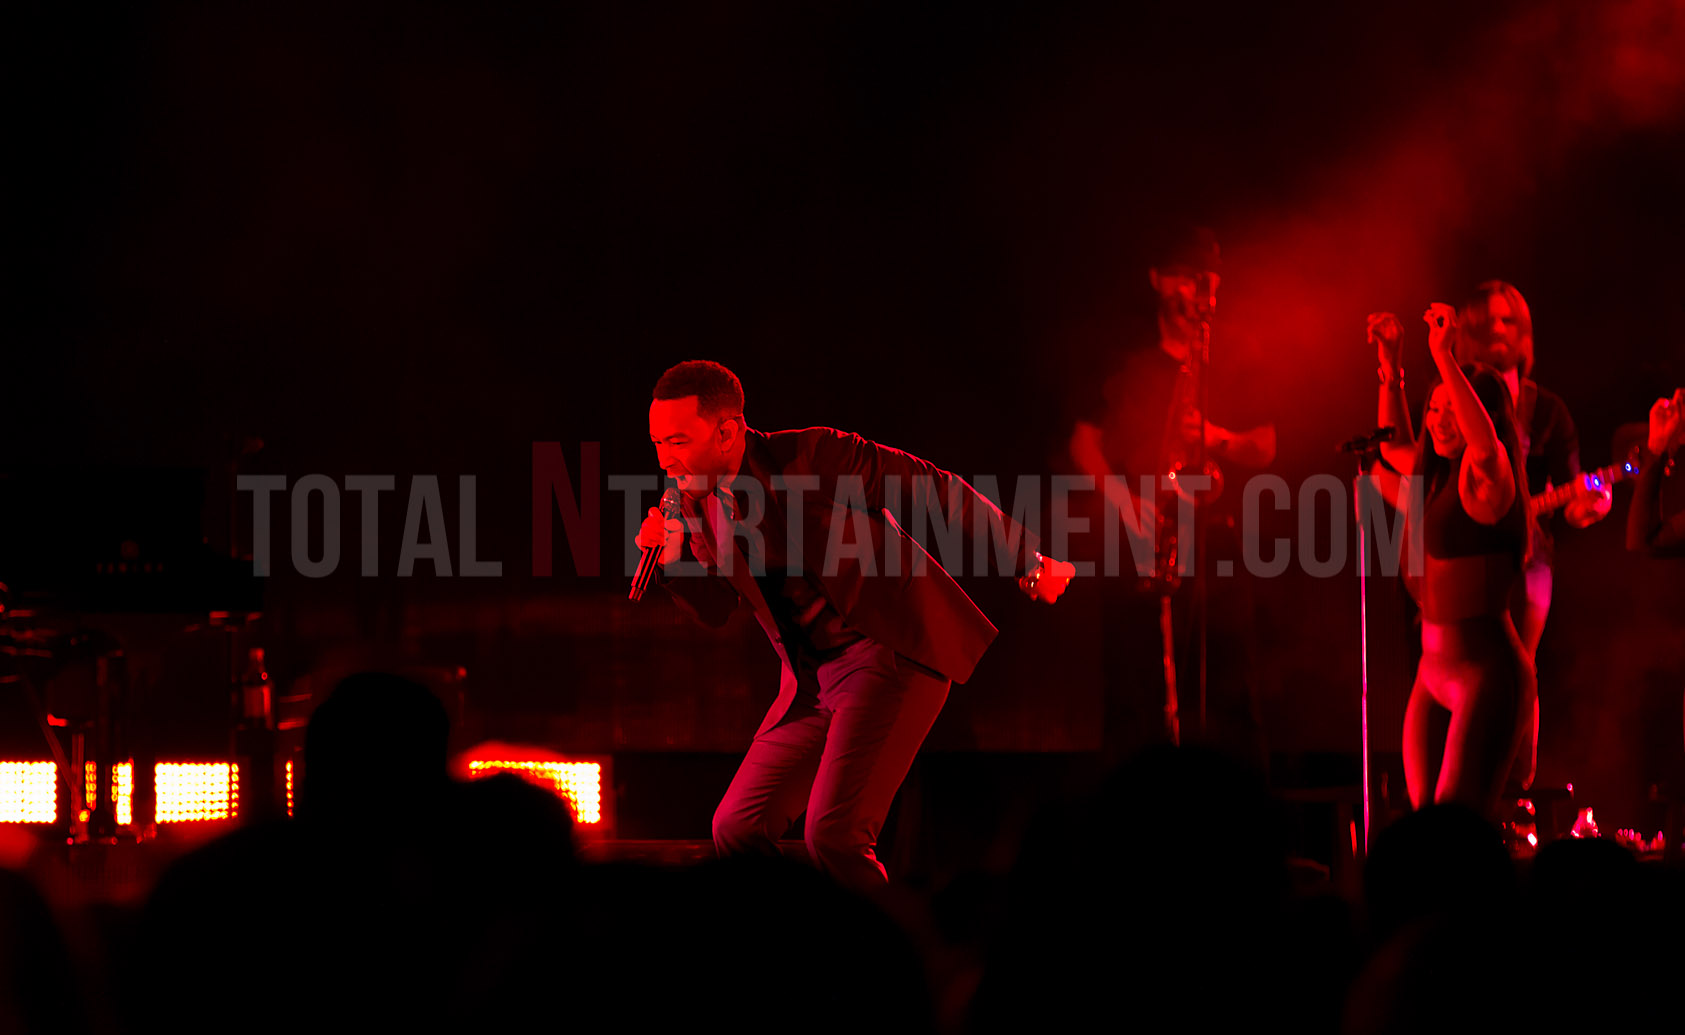 John Legend, Liverpool, Concert, Live Event